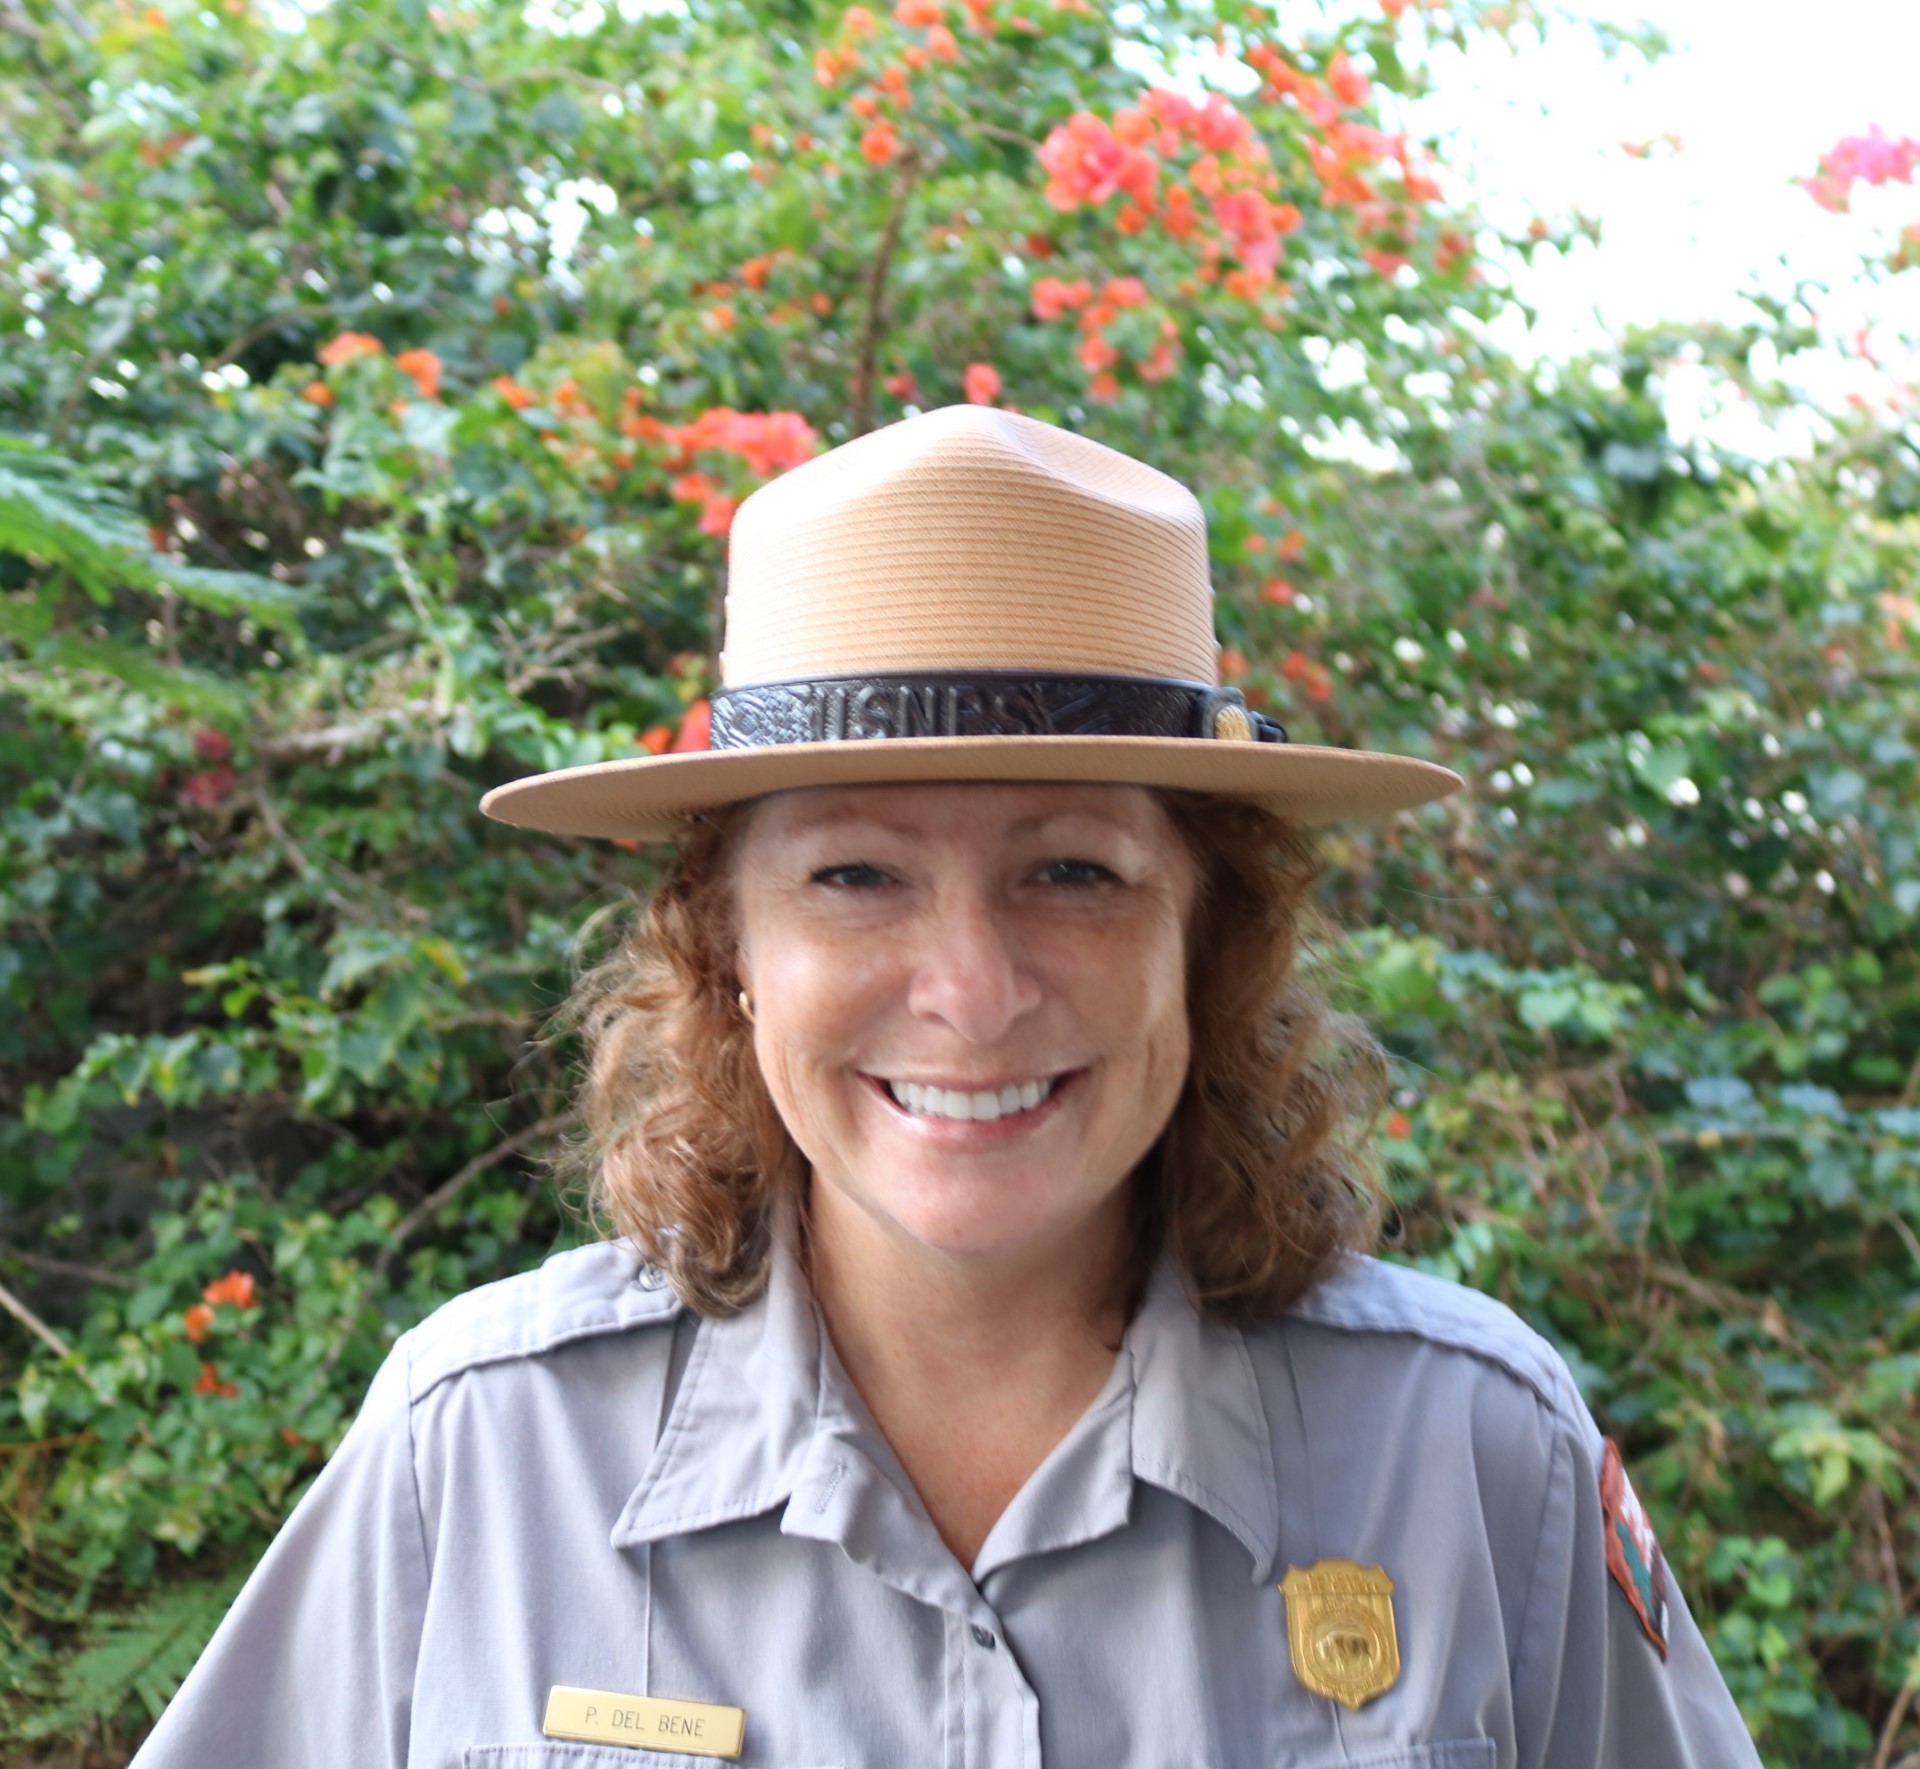 Smiling woman wearing a ranger hat